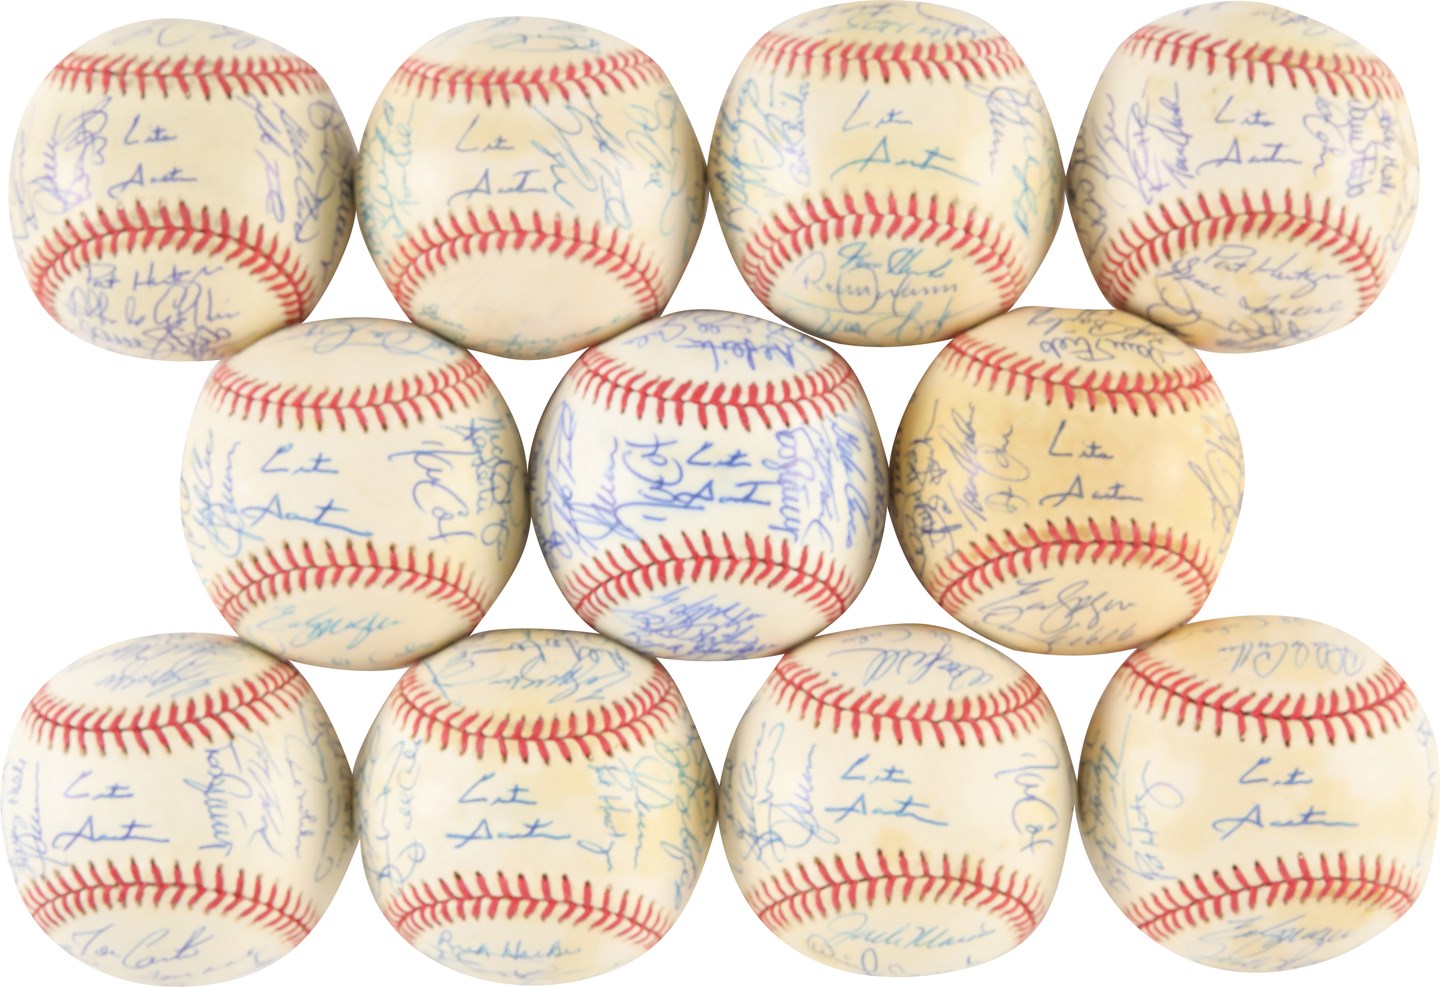 Baseball Autographs - 1992 & 1993 World Champion Blue Jays Team Signed Baseball Collection (19)